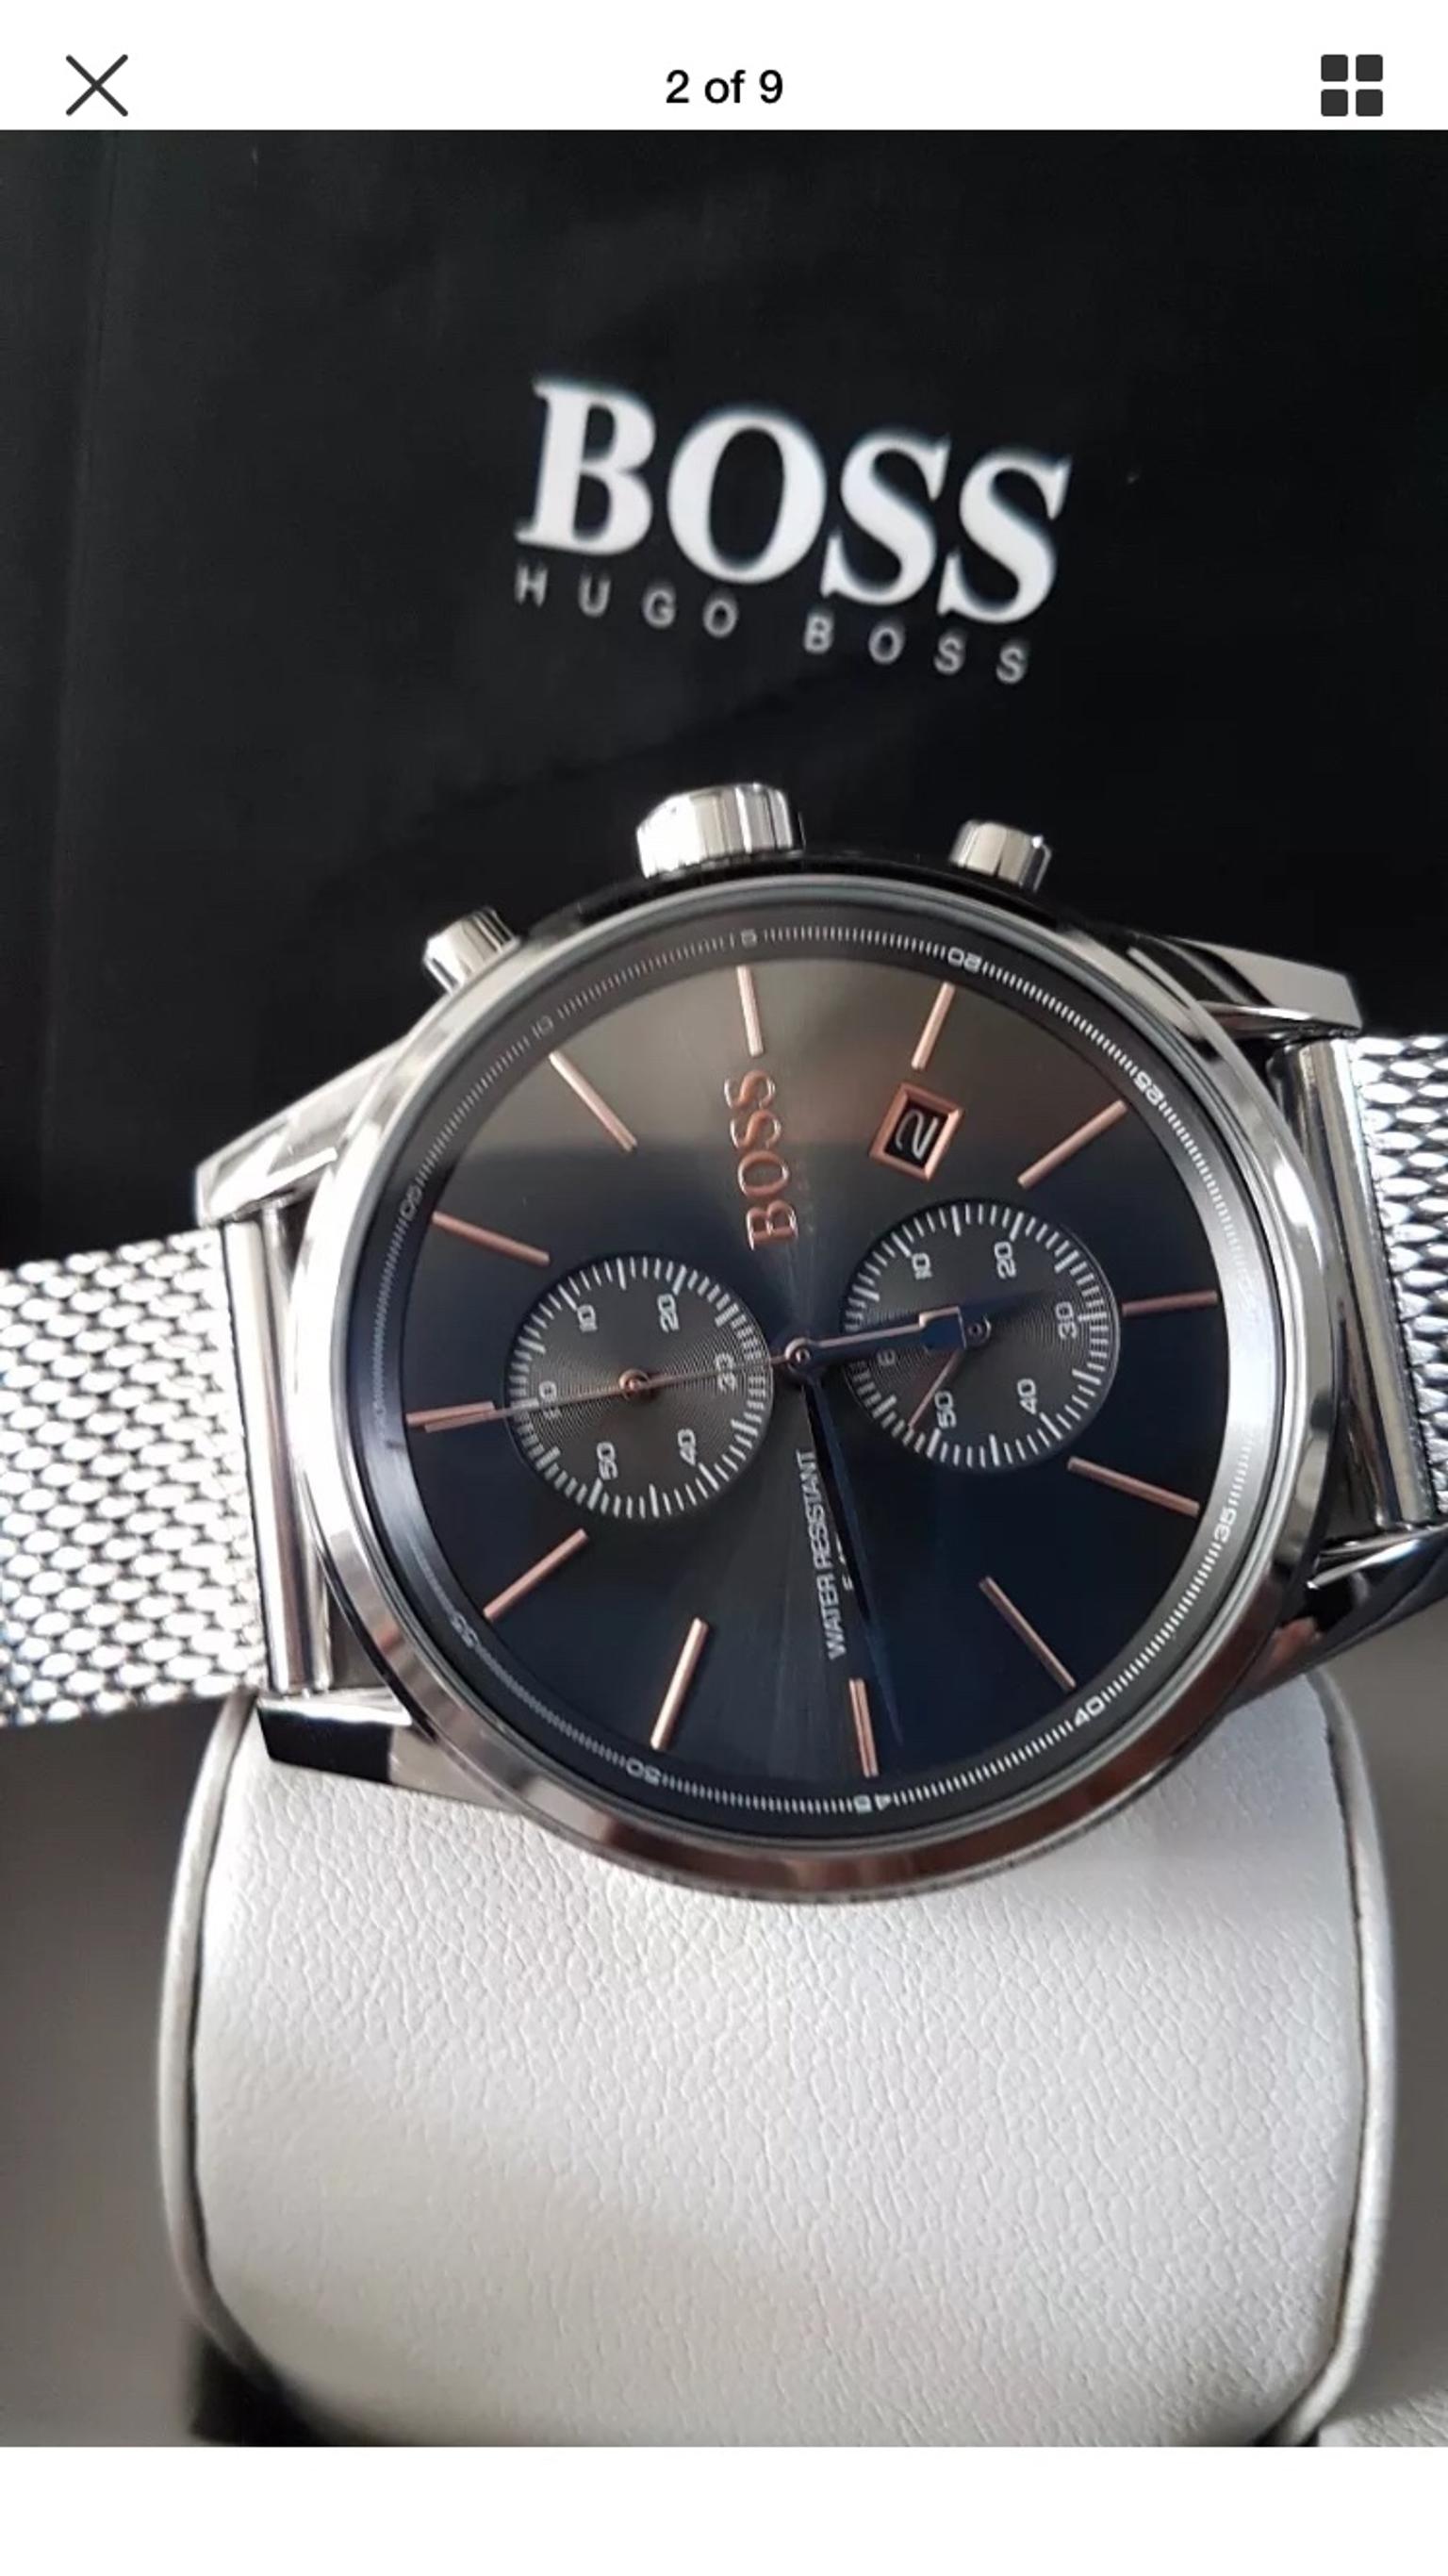 hugo boss watch and wallet set fake